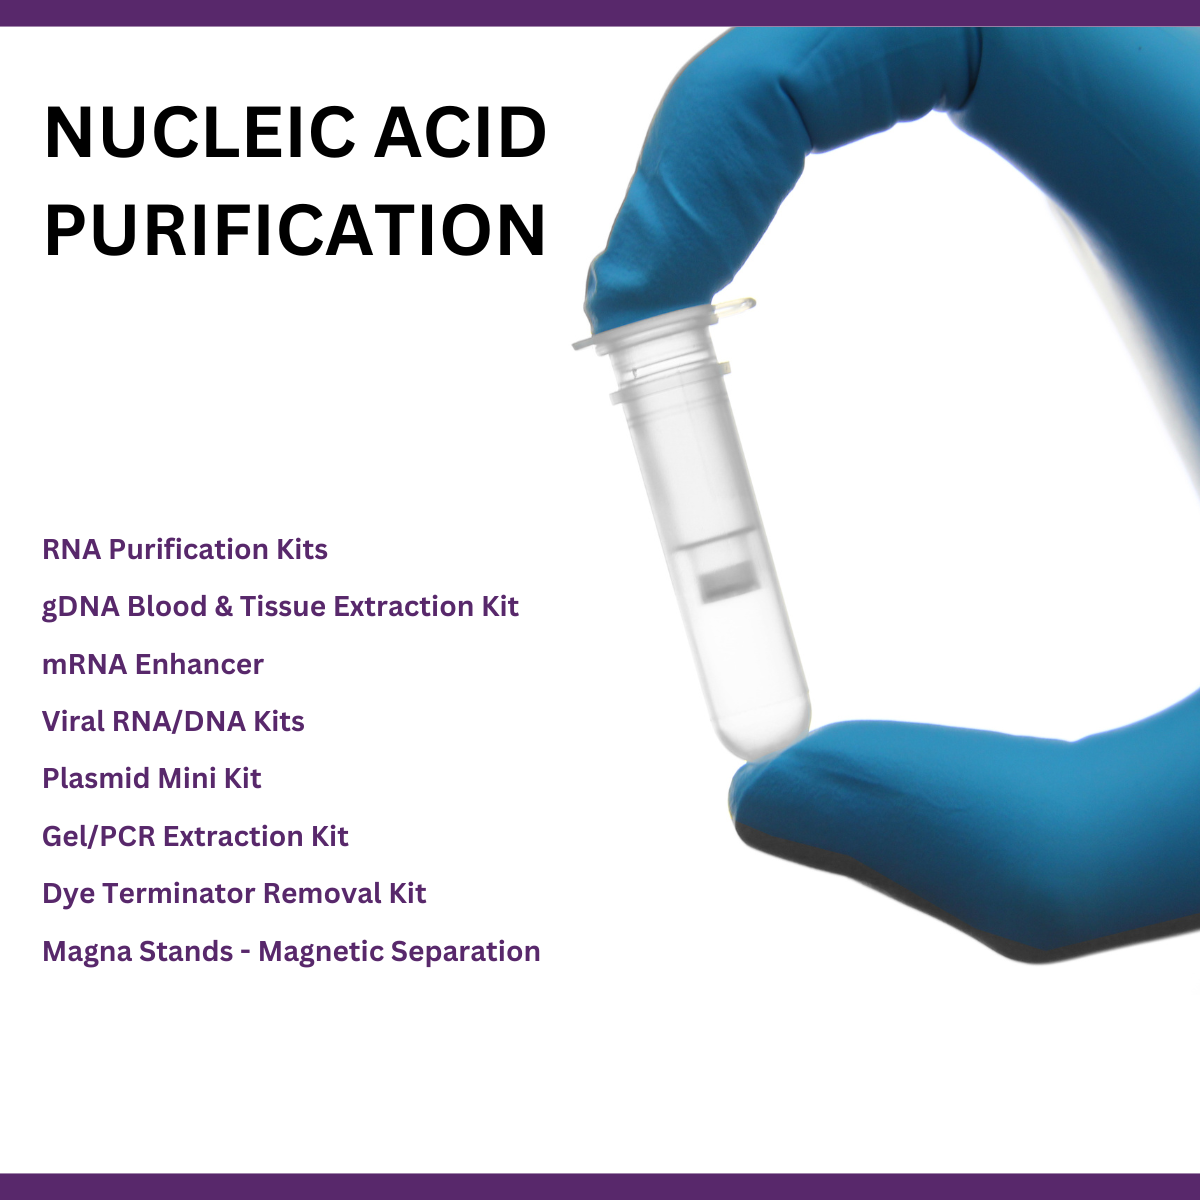 Nucleic acid purification, RNA purification, mRNA enhancer, plasmid kit, gDNA blood and tissue